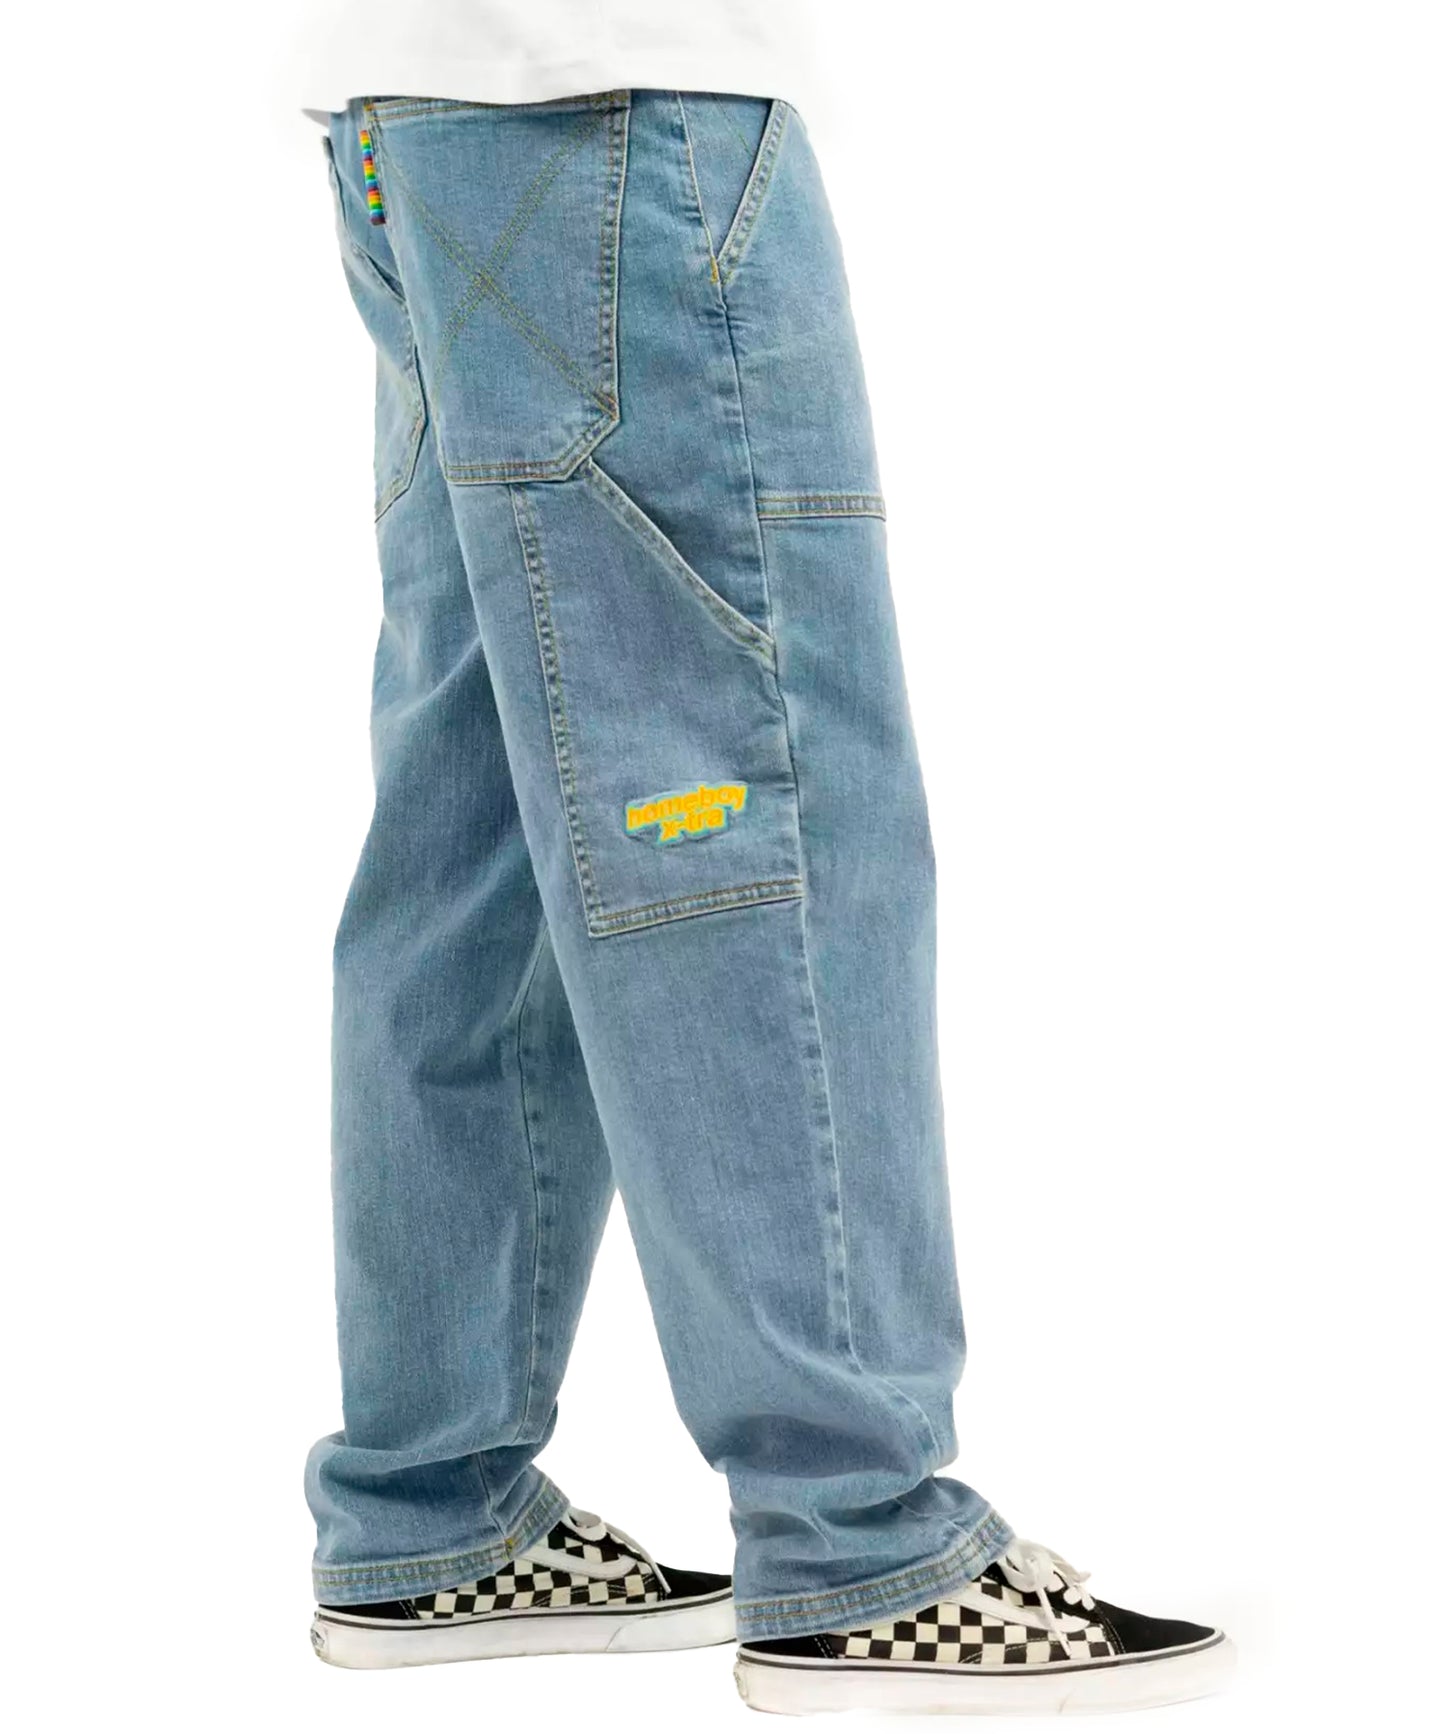 home-boy-pantalon-xrta-work-color-denim-holgados-tipo-pantalón-de-trabajo-ideales-para-patinar-marca-legendaria.